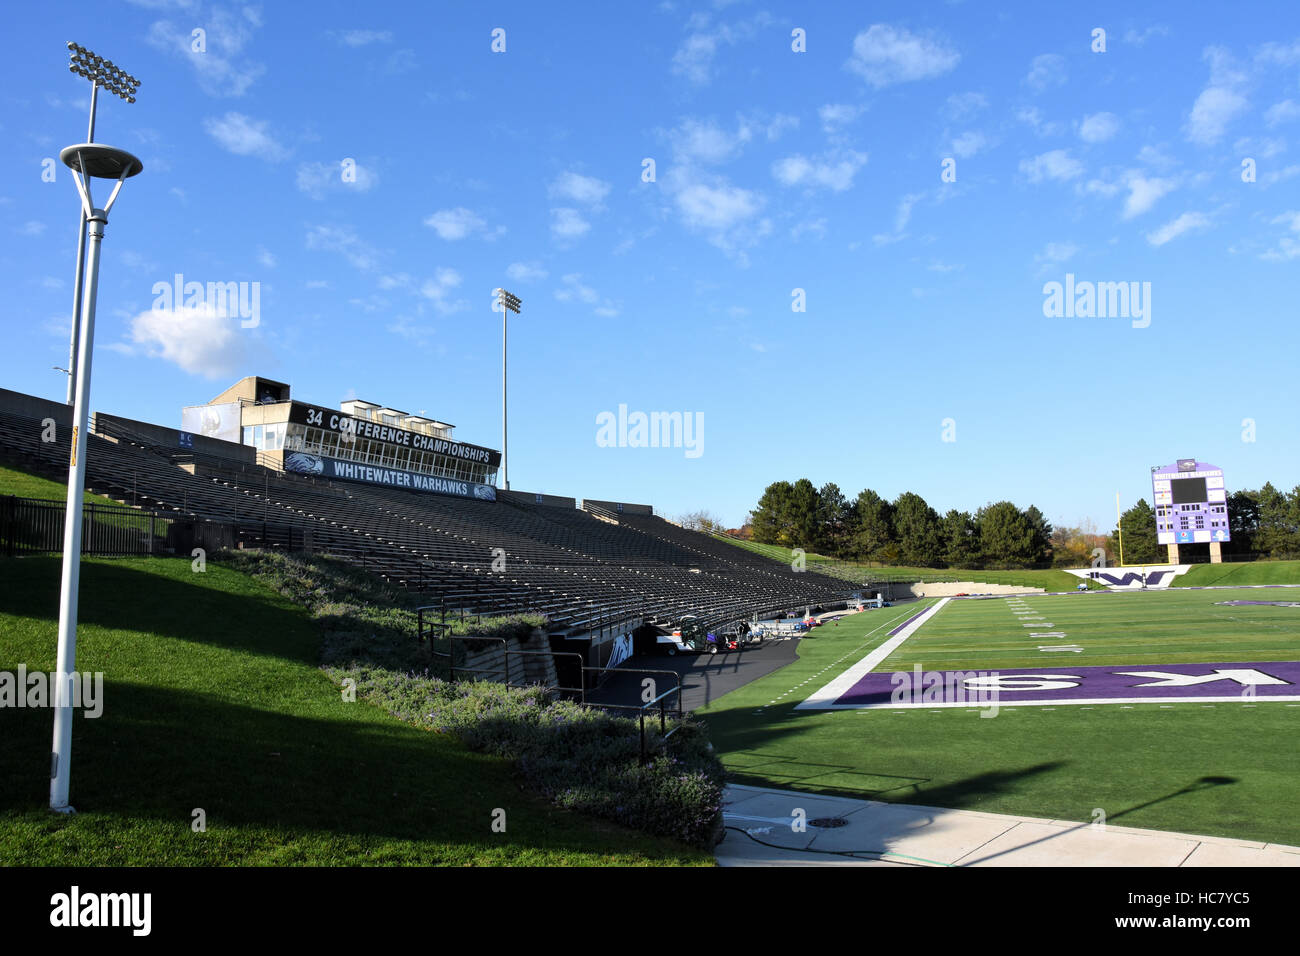 Perkins Football Stadium at University of Wisconsin - Whitewater, Whitewater, Wisconsin Stock Photo